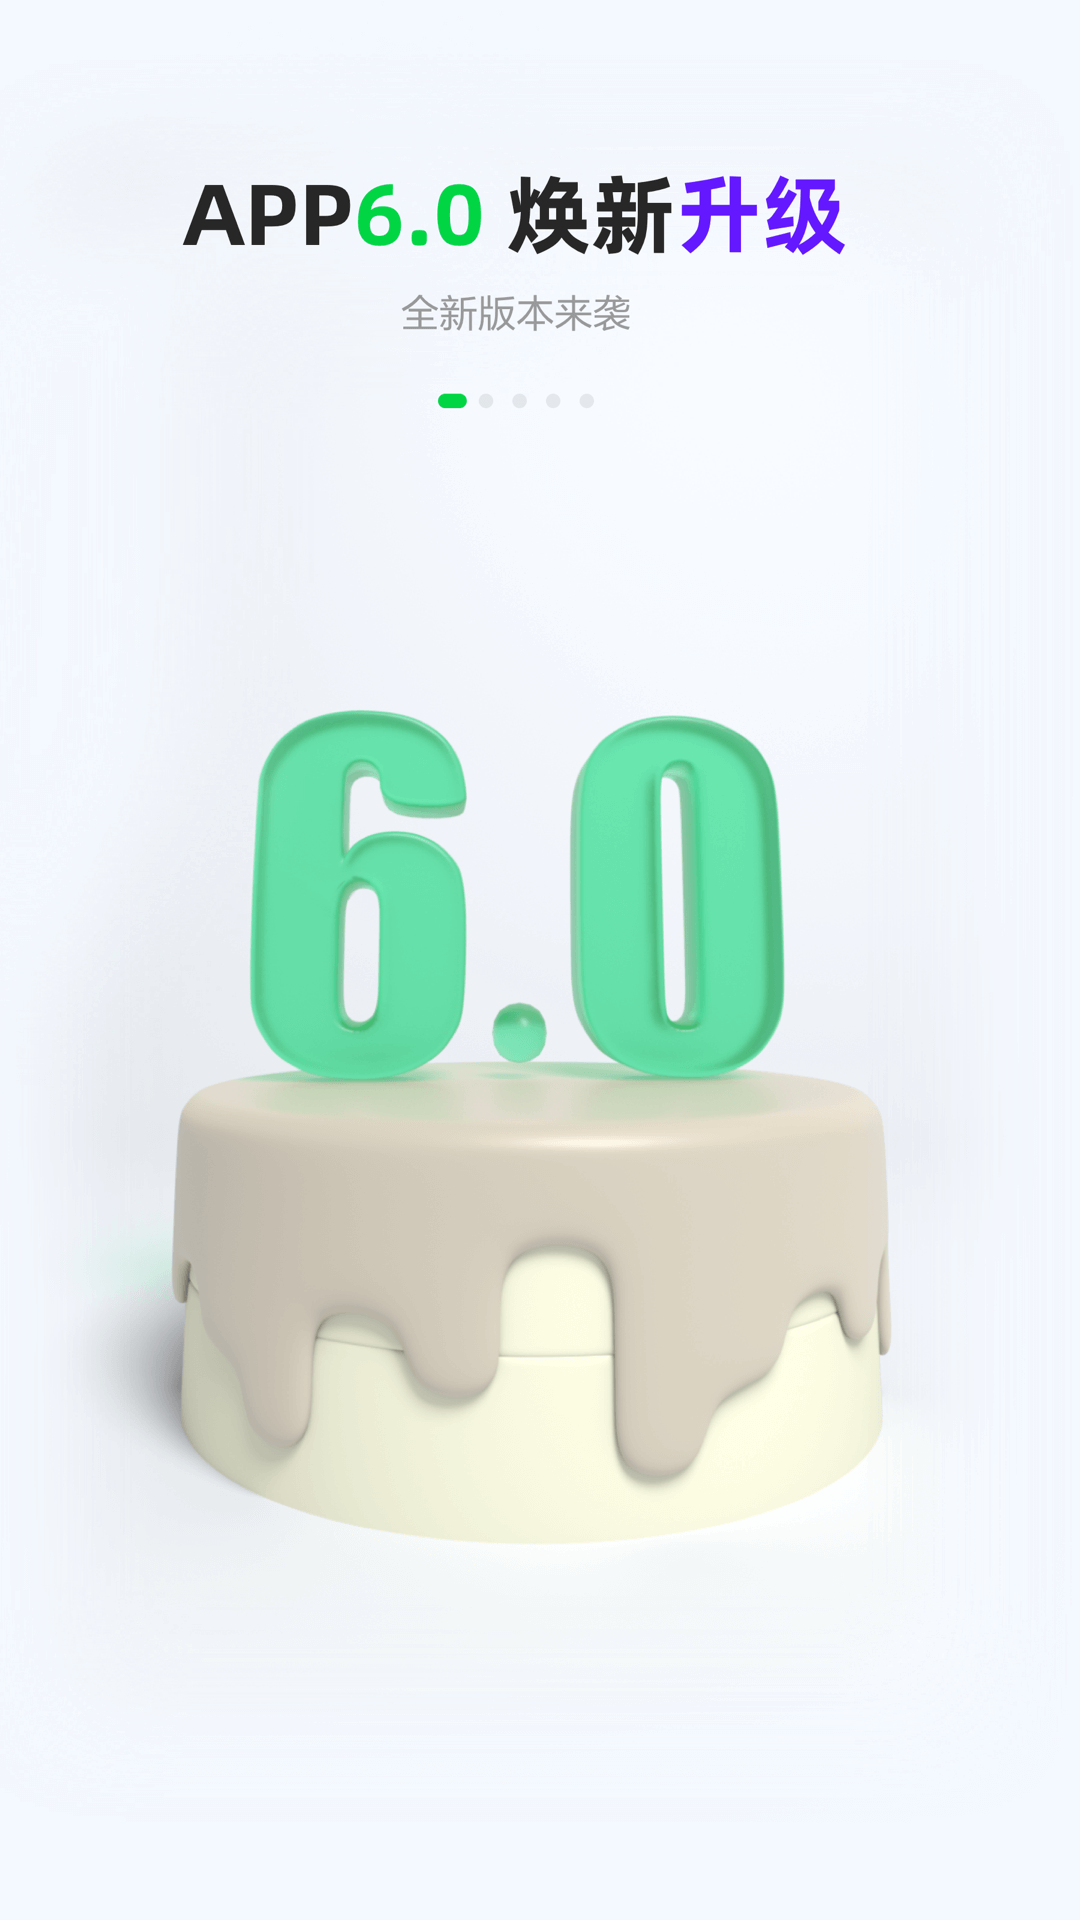 gofun出行最新版本 v6.3.4.1 官方安卓版0